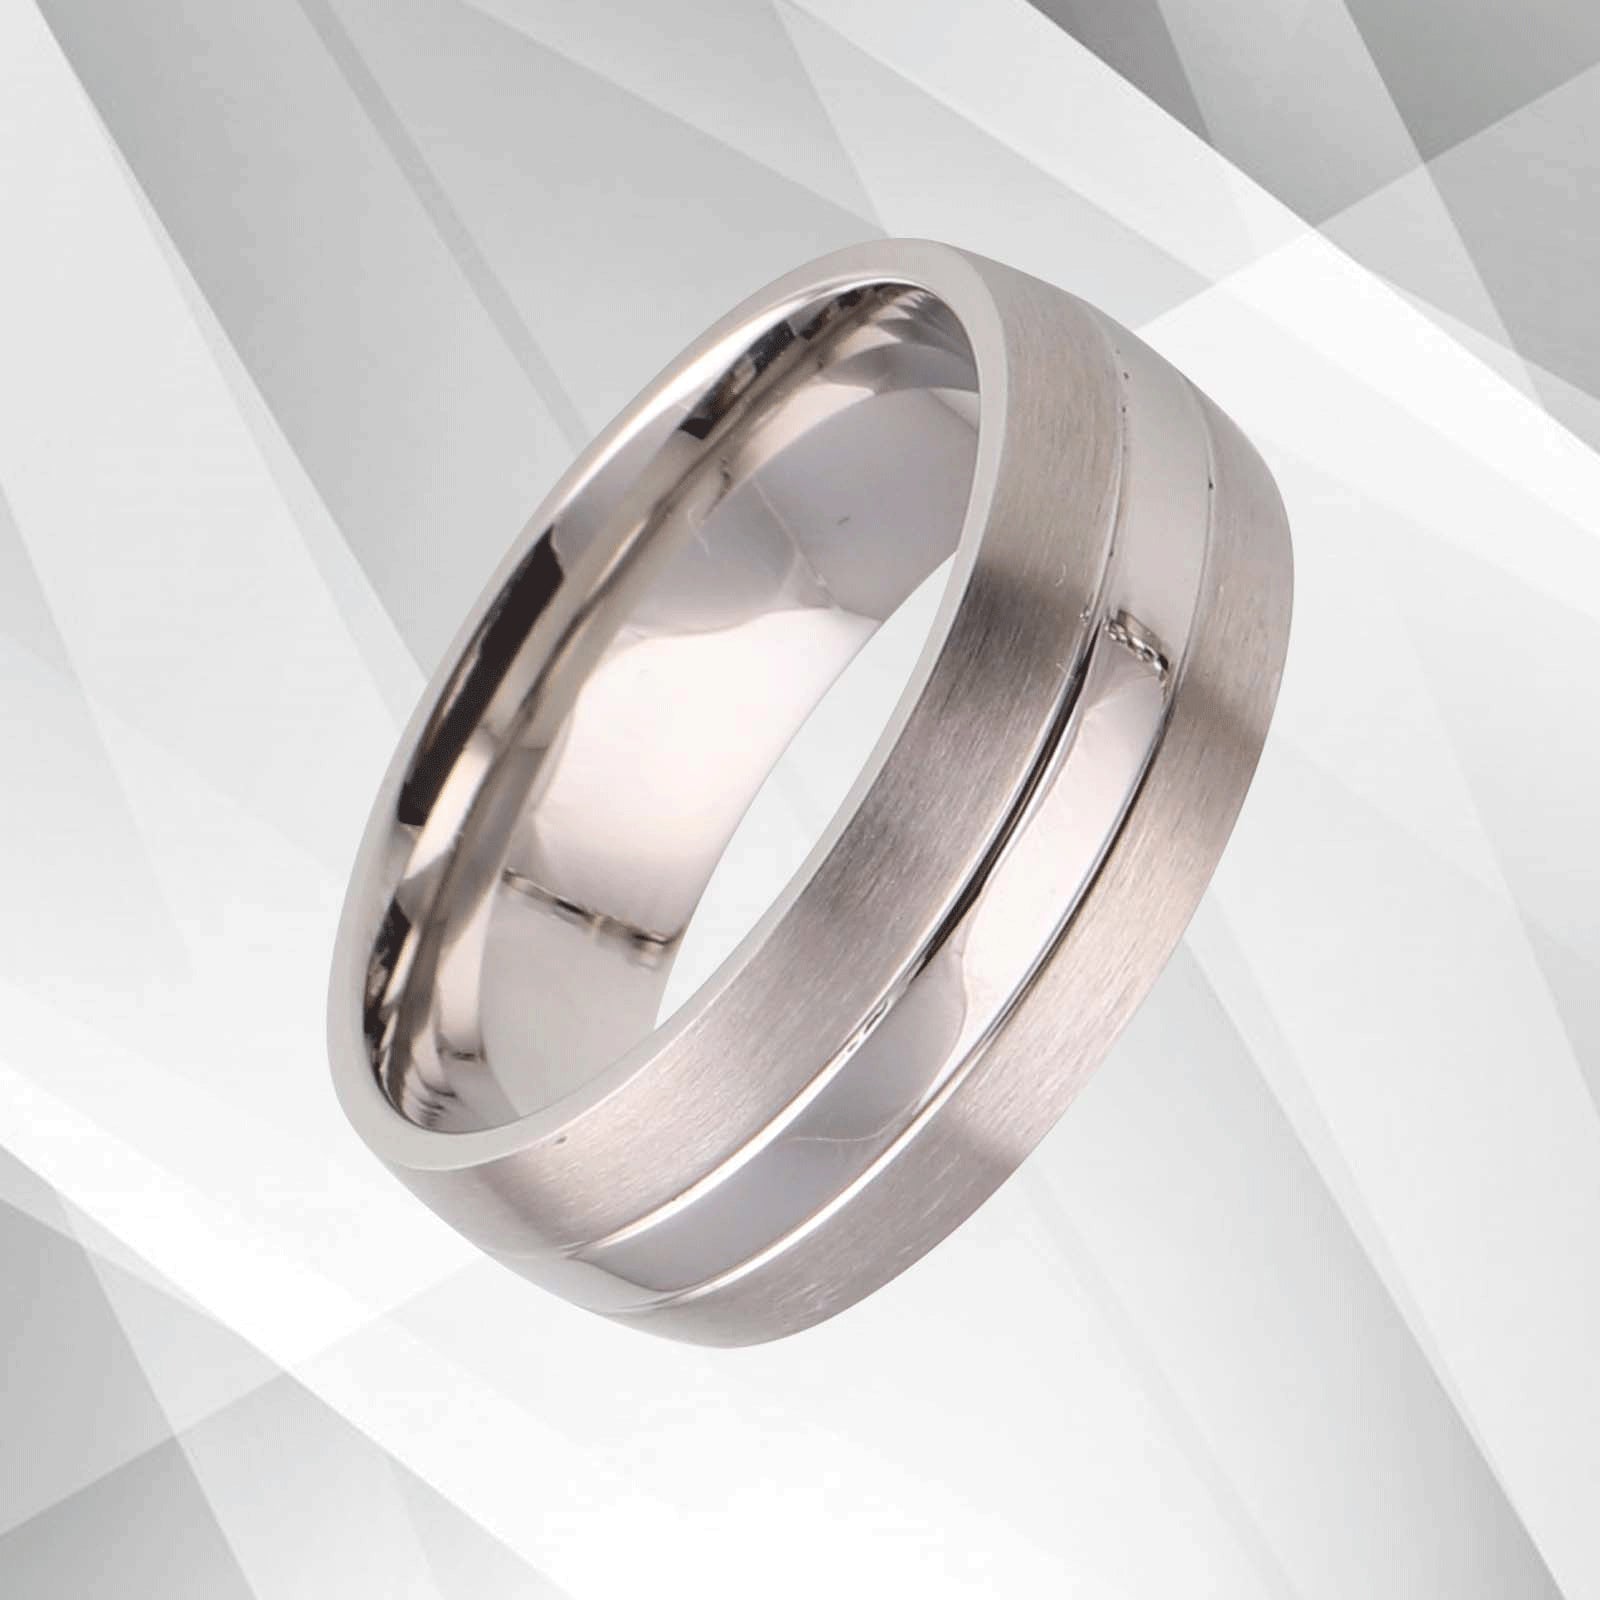 Stylish Titanium & White Gold Plated Wedding Band Ring - Comfort Fit, Hypoallergenic, Men's Engagement Anniversary Gift - Jewelry & Watches - Bijou Her -  -  - 